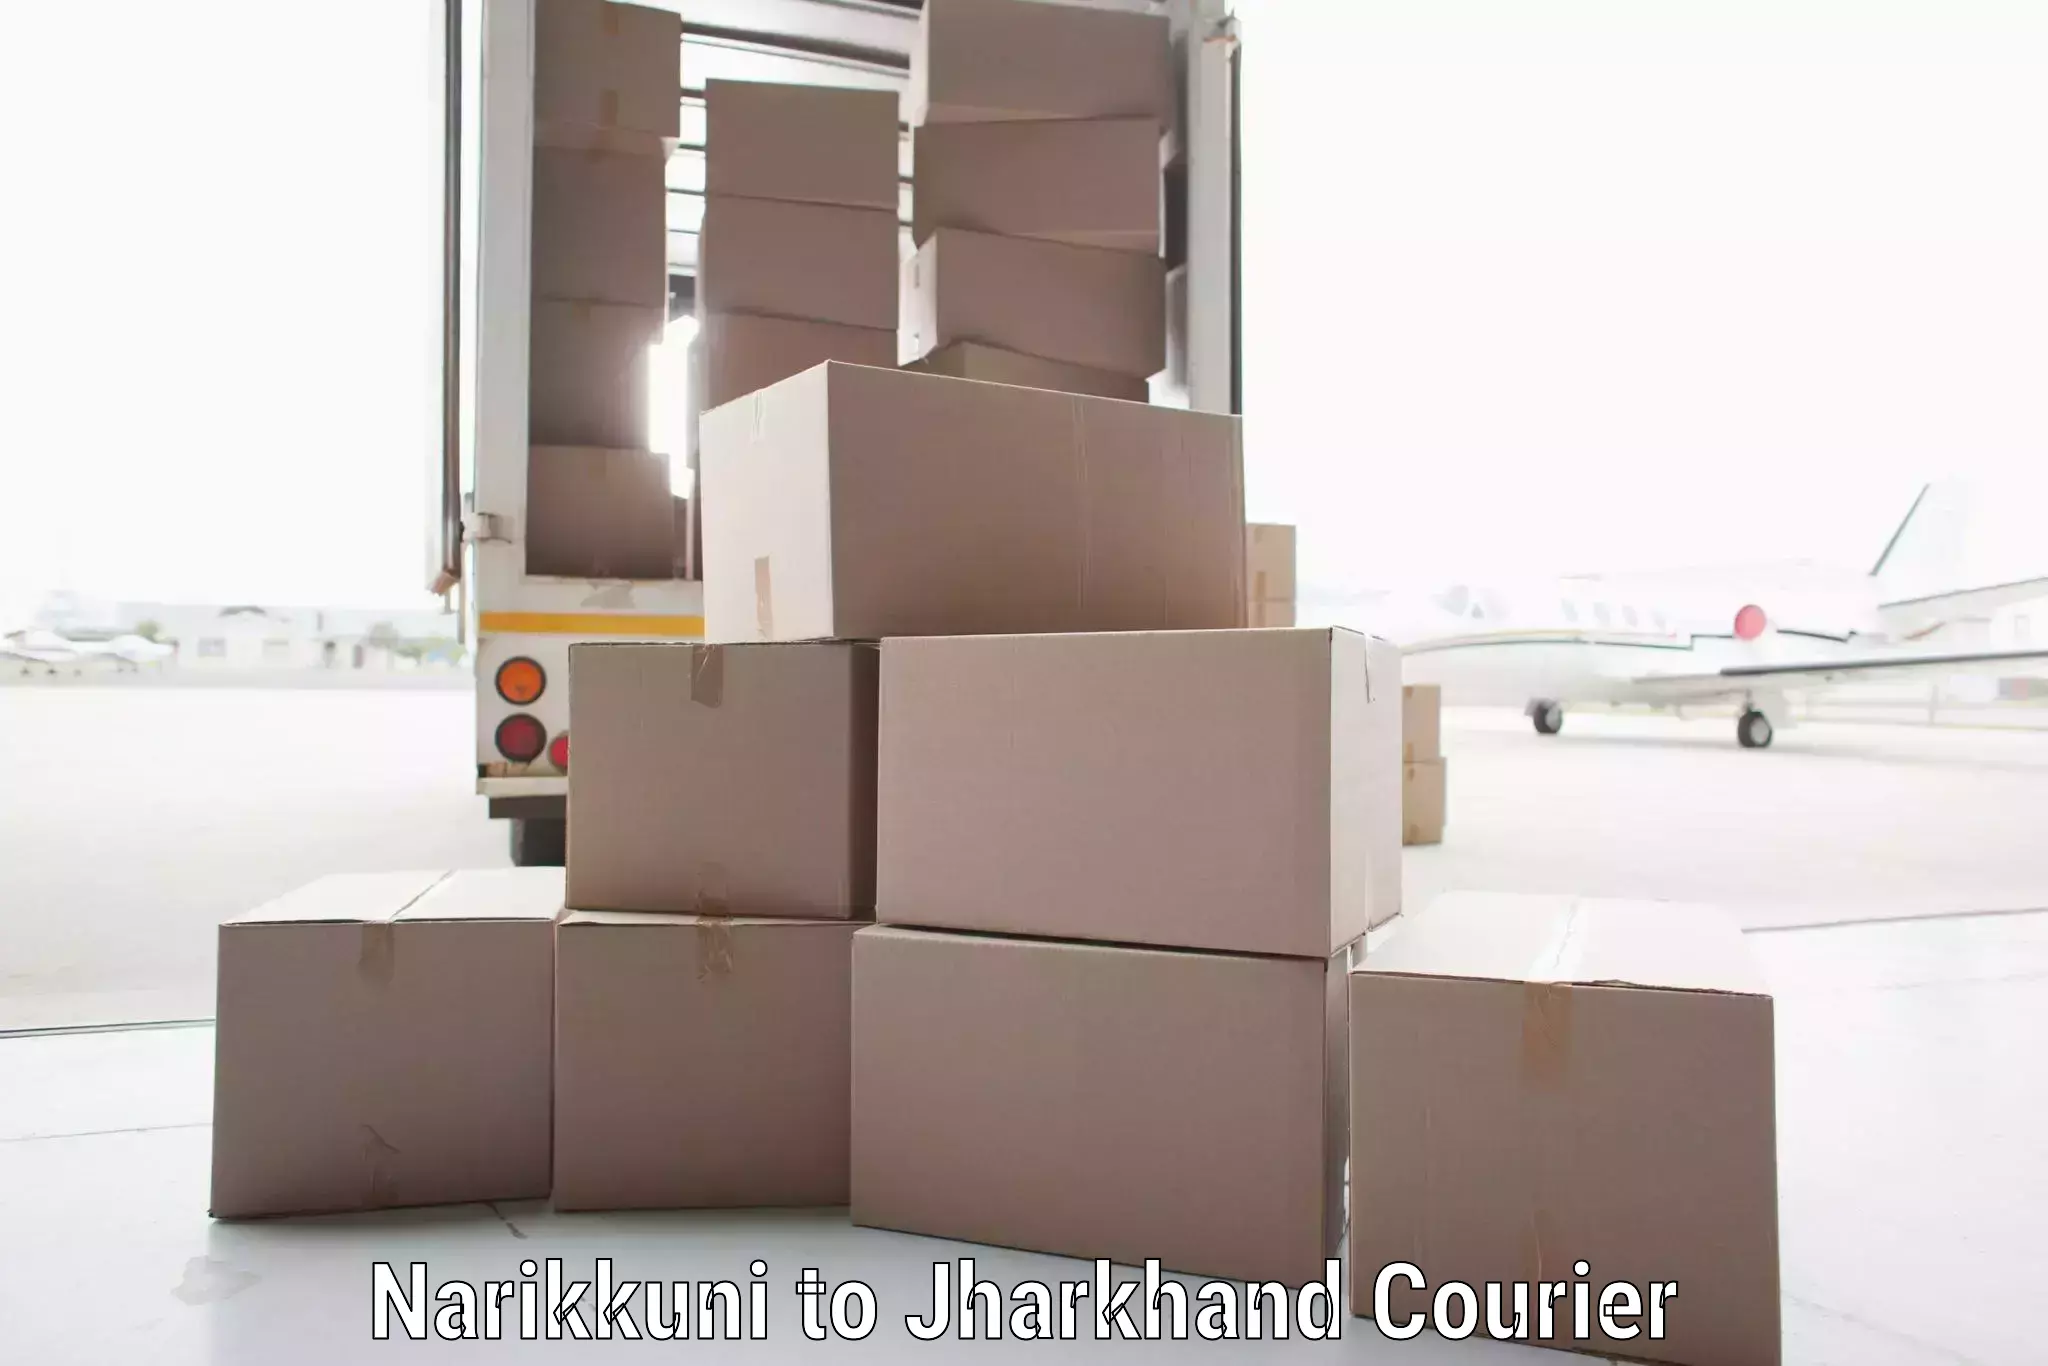 Efficient logistics management Narikkuni to Peterbar